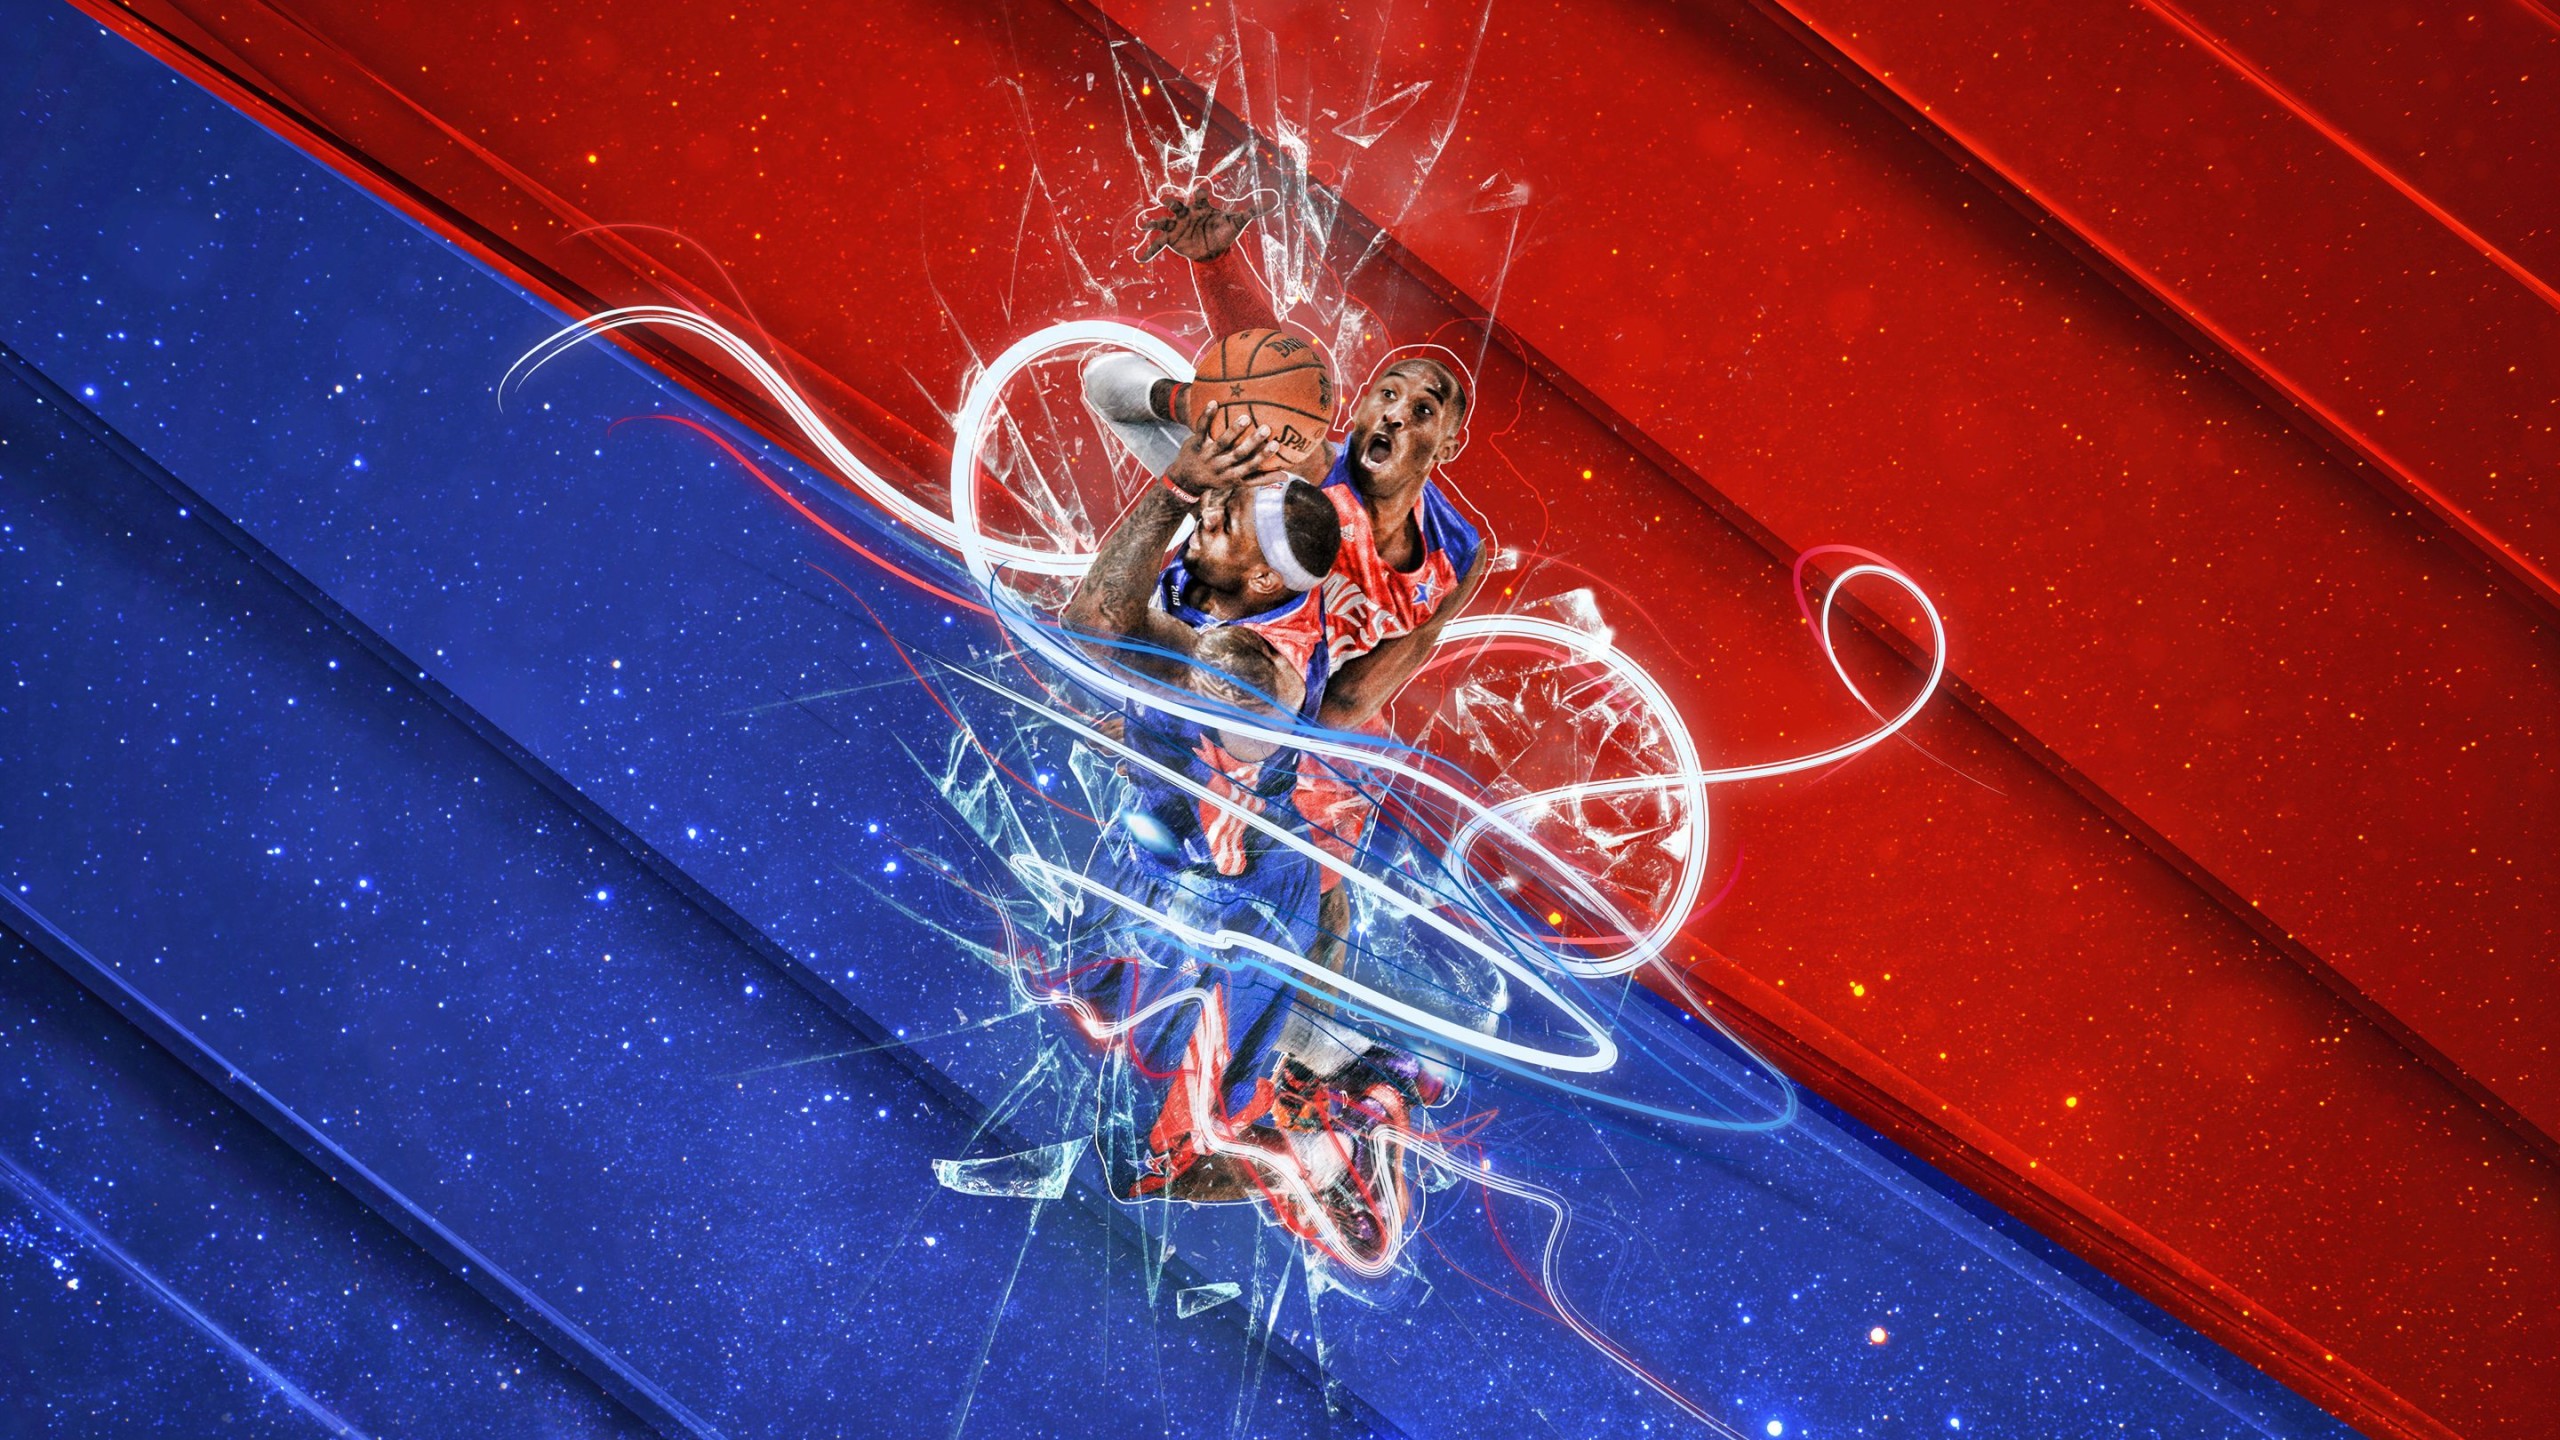 LeBron James Vs Kobe Bryant - NBA - Basketball Wallpaper for Desktop 2560x1440